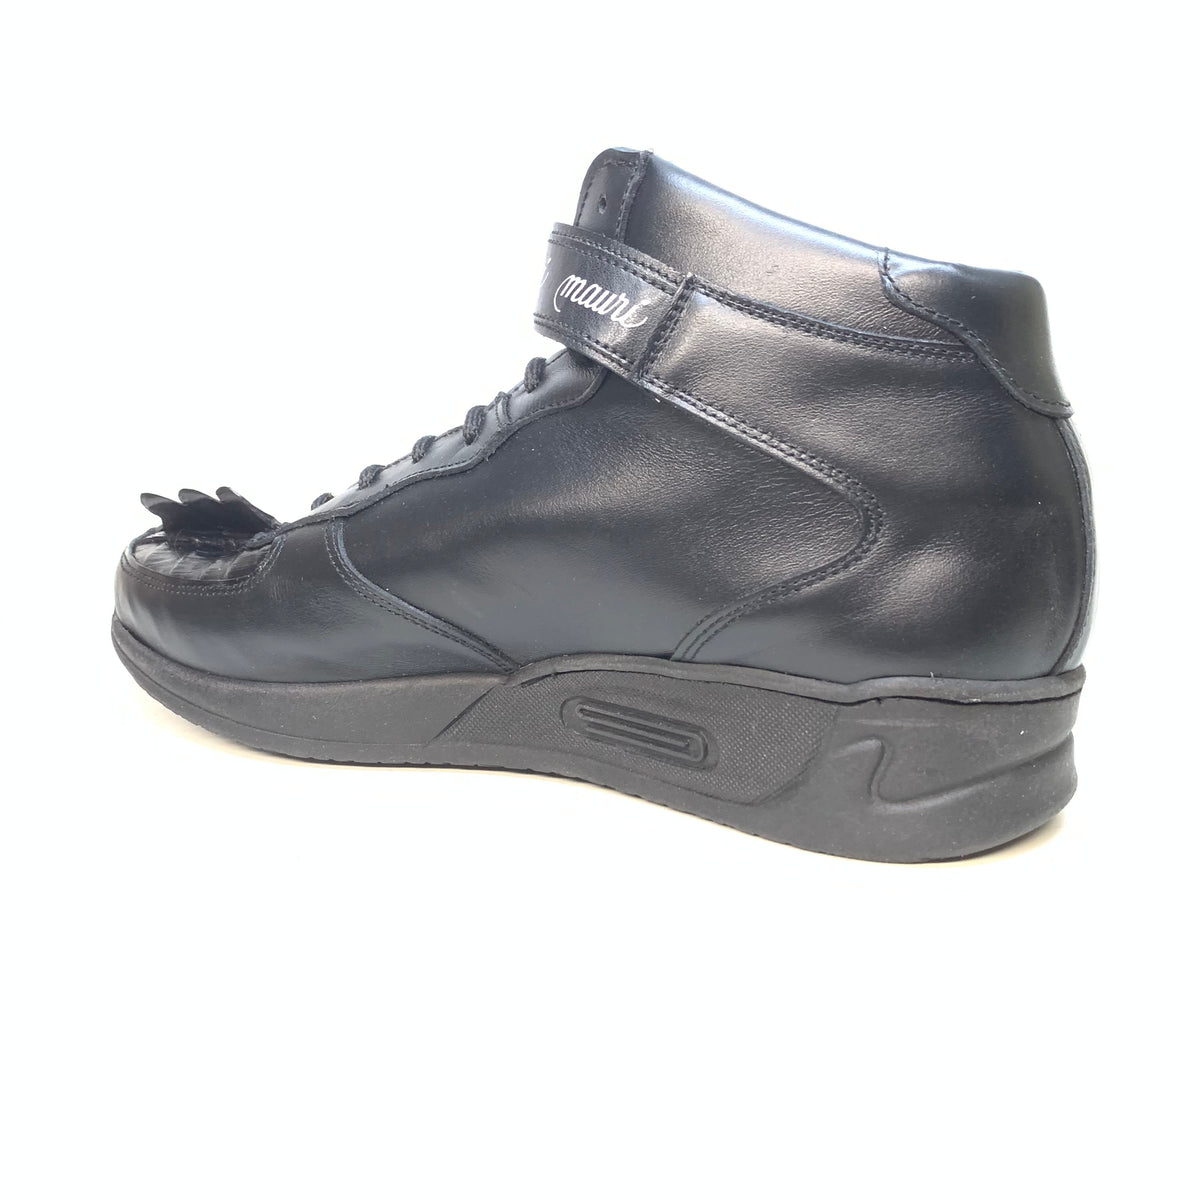 Mauri - M764 Black Crocodile Tail Sneakers - Dudes Boutique